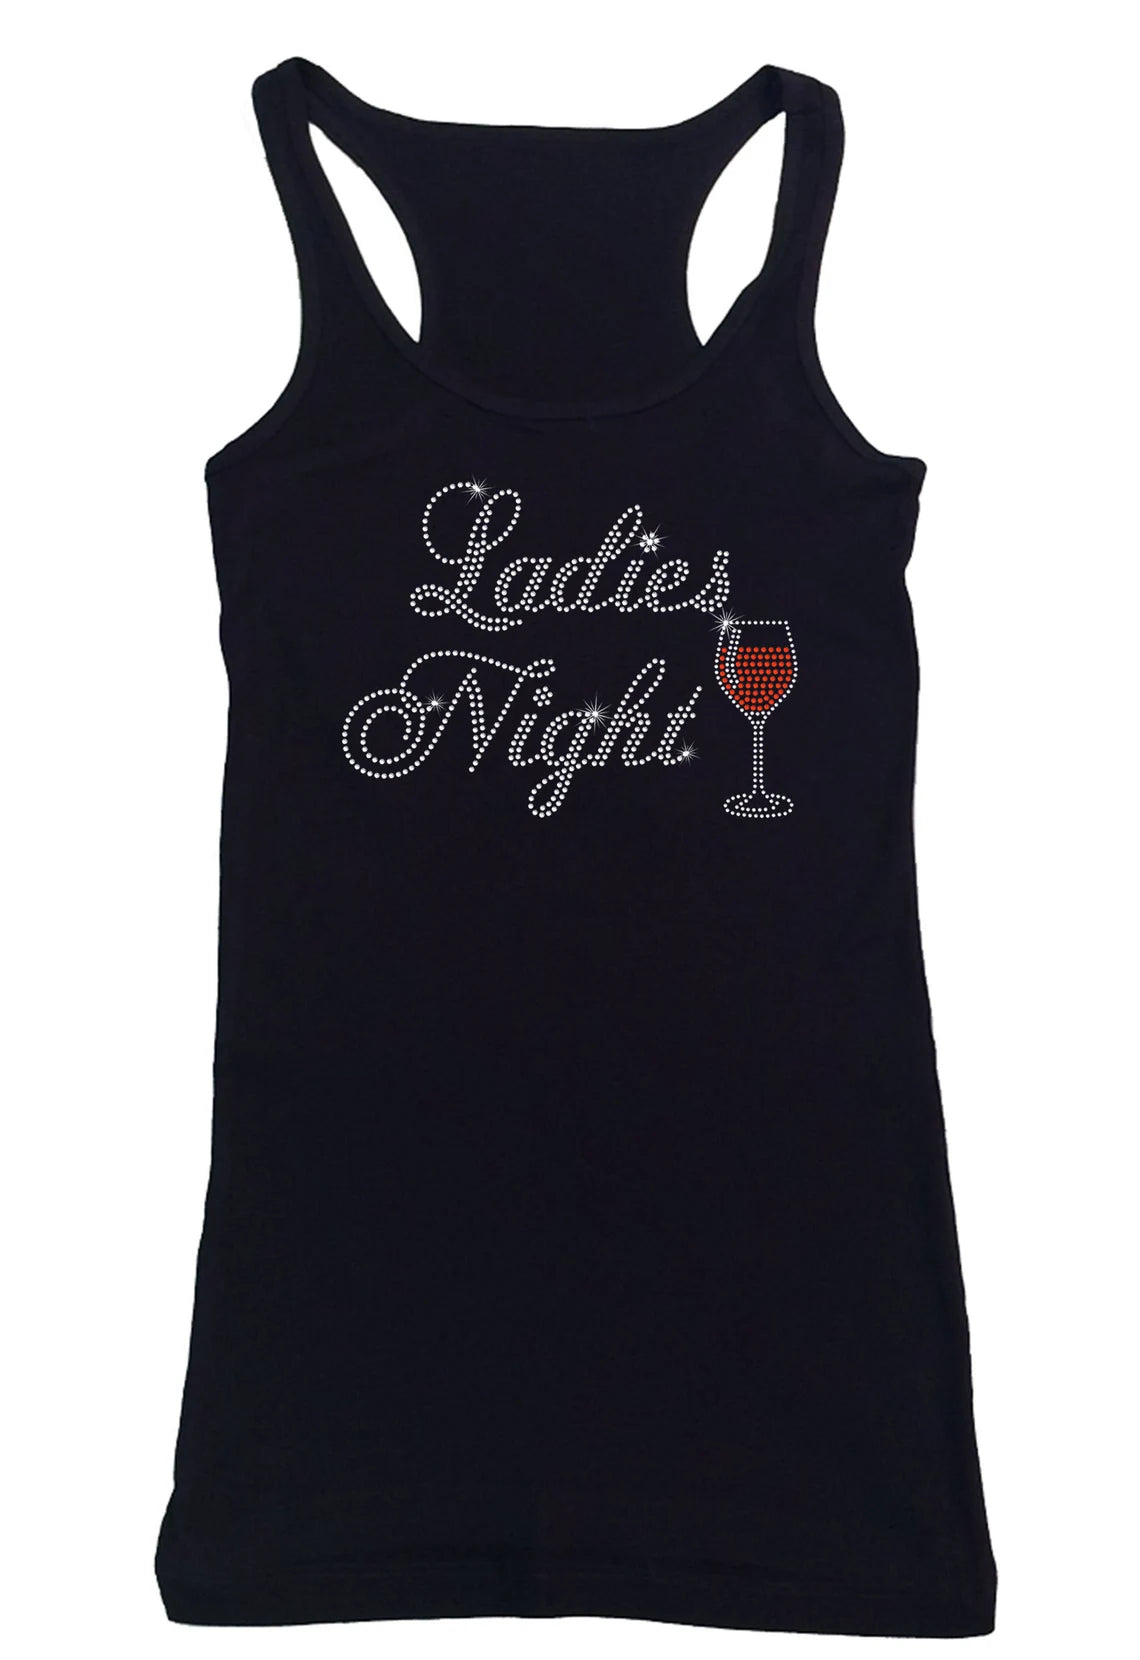 Women's Rhinestone Fitted Tight Snug Ladies Night with Red Wine Glass - Wine Tasting, Girls Trip, Wine shirt